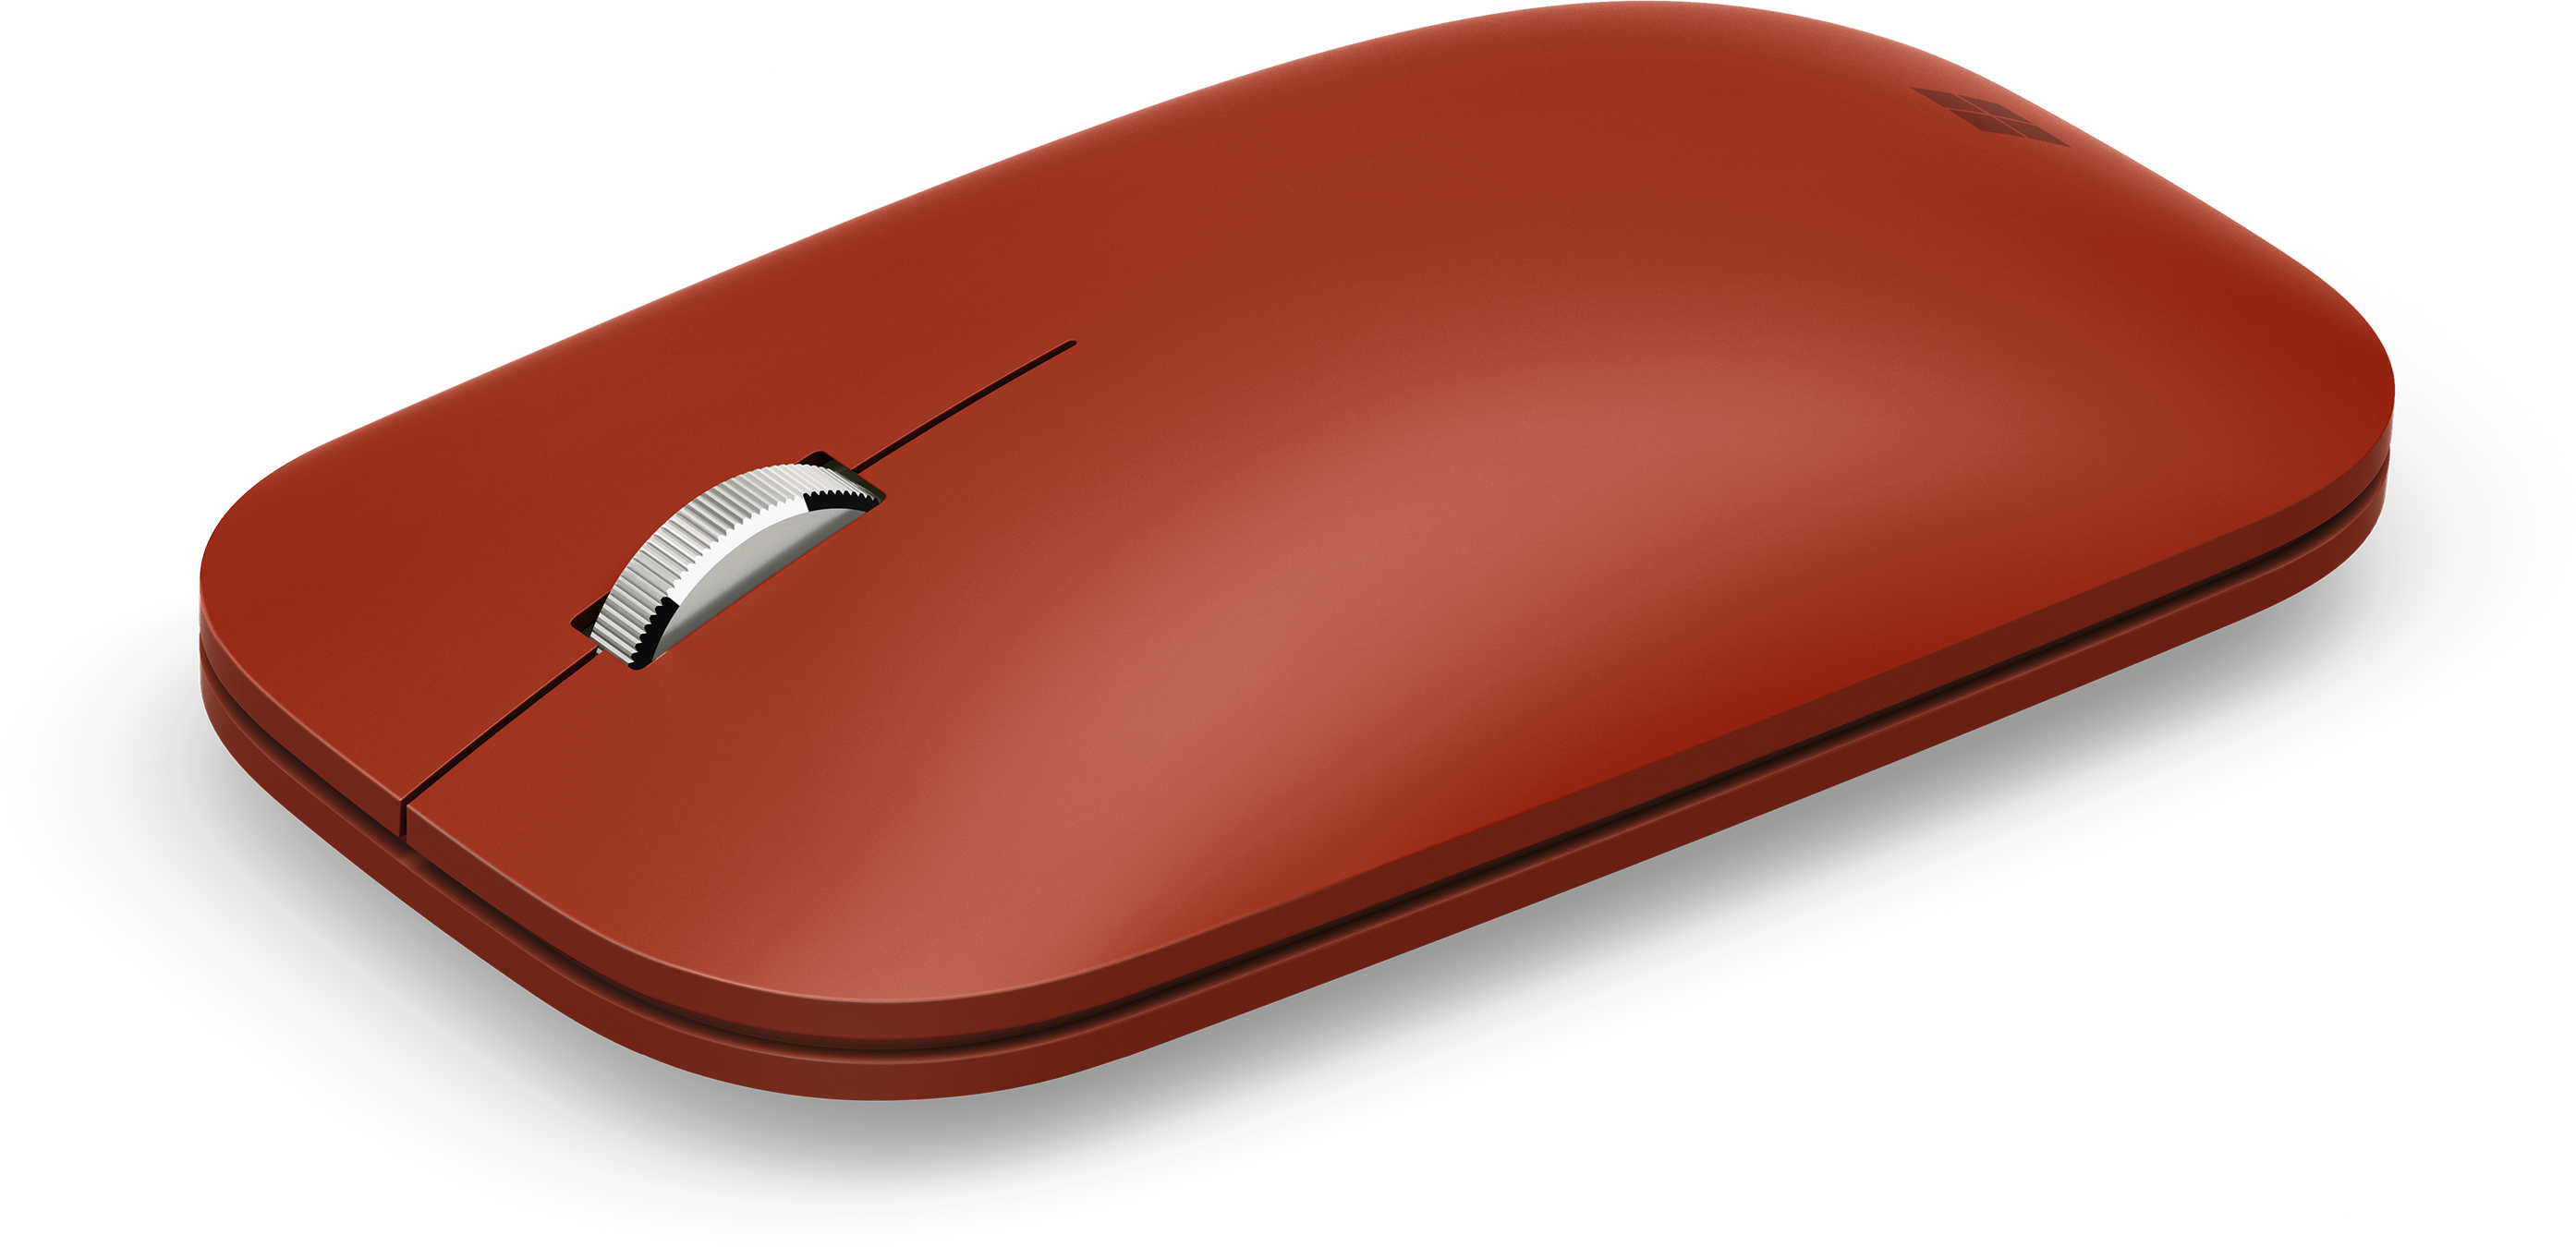 Microsoft Surface Mouse - souris - Bluetooth 4.0 - gris - WS3-00002